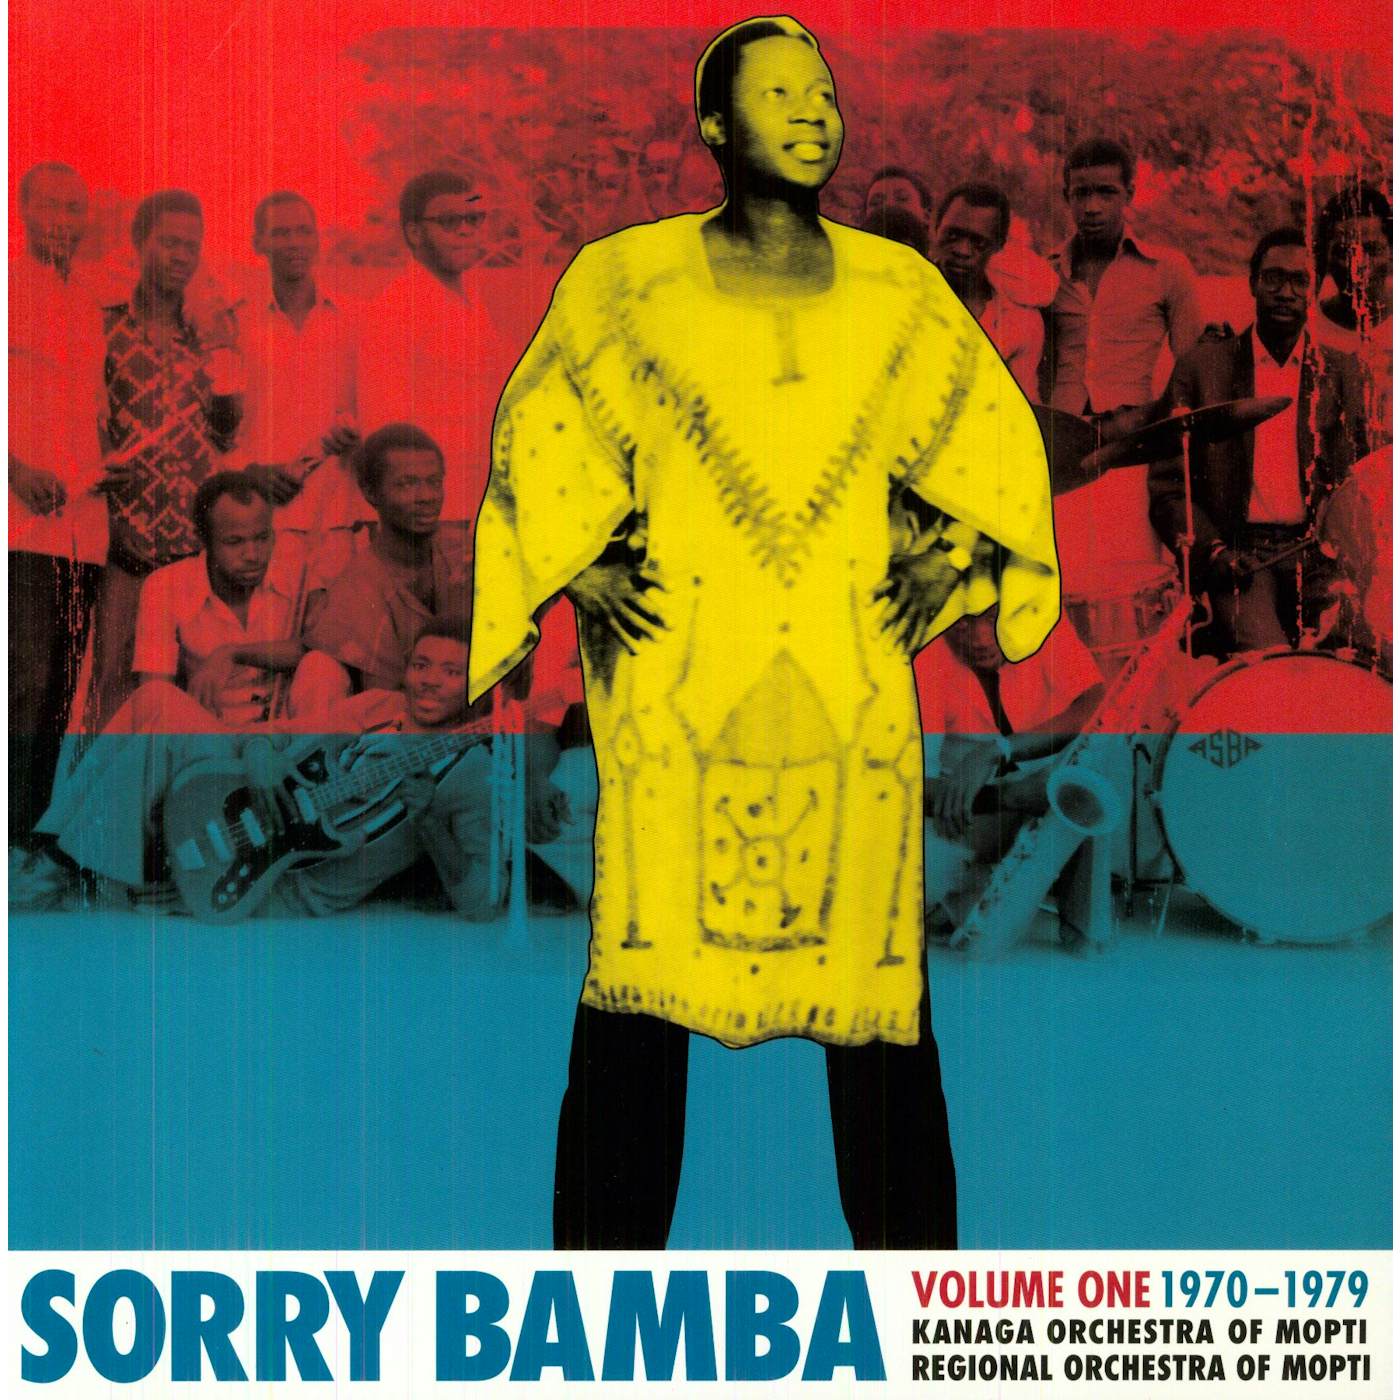 Sorry Bamba Volume One 1970 - 1979 Vinyl Record